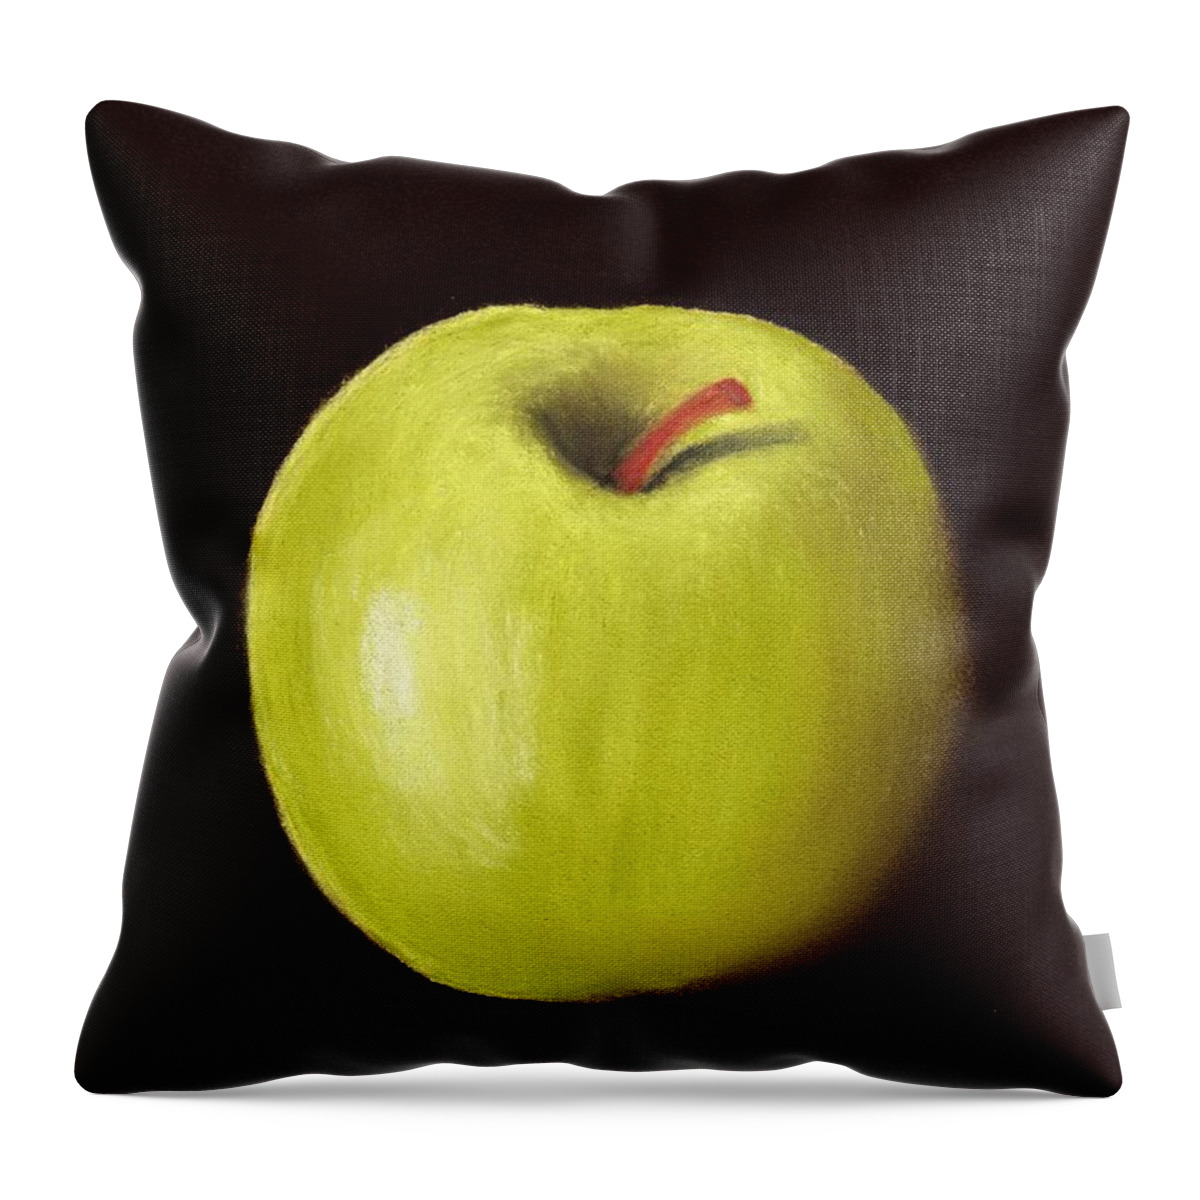 Apple Throw Pillow featuring the painting Granny Smith Apple by Anastasiya Malakhova